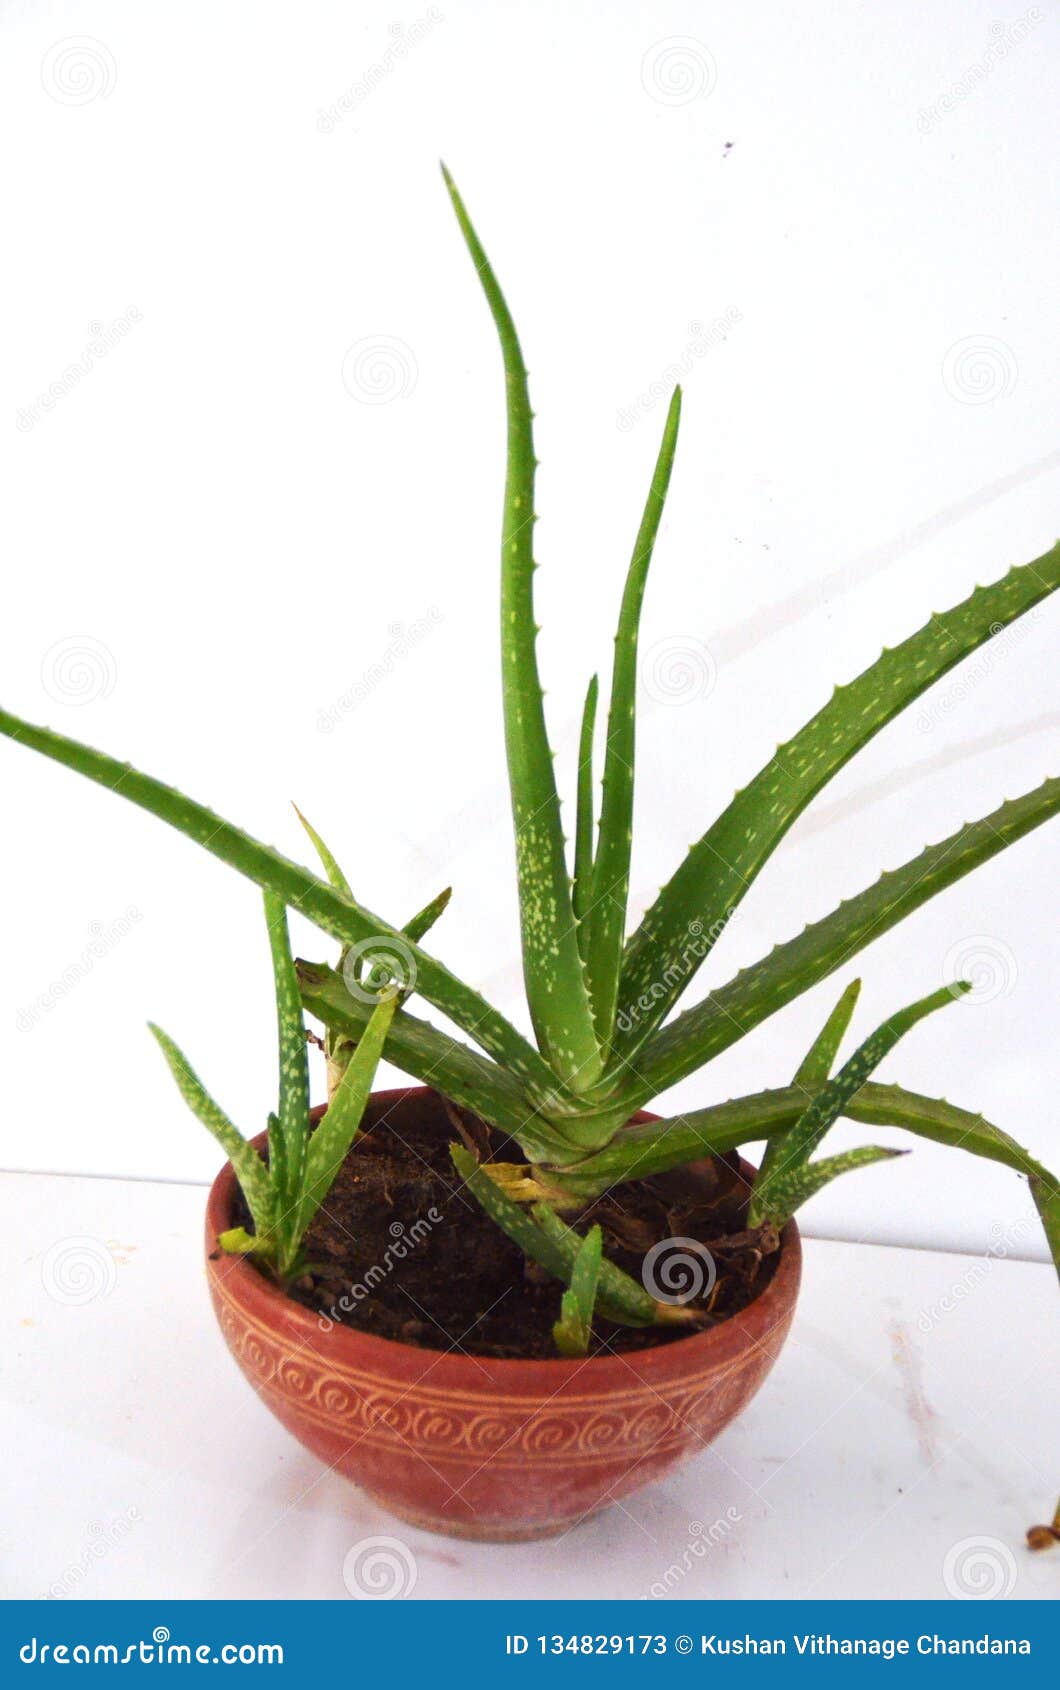 Aloe Vera Plants Stock Image Image Of Multiple Medicinal 134829173